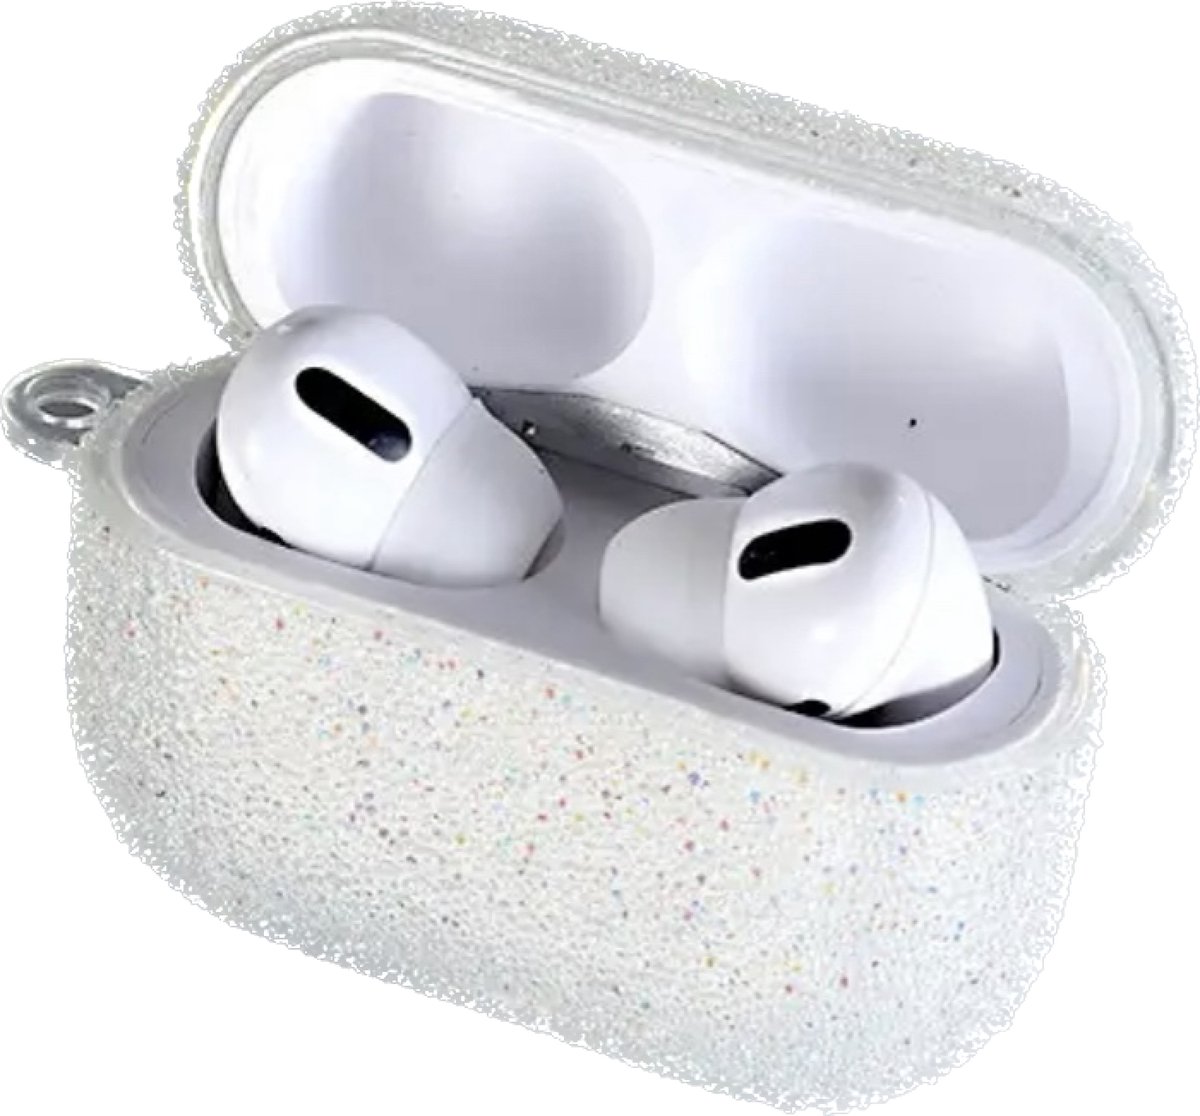 Hidzo - Hoes voor Apple's Airpods Pro - Hard case - Glitter - Wit